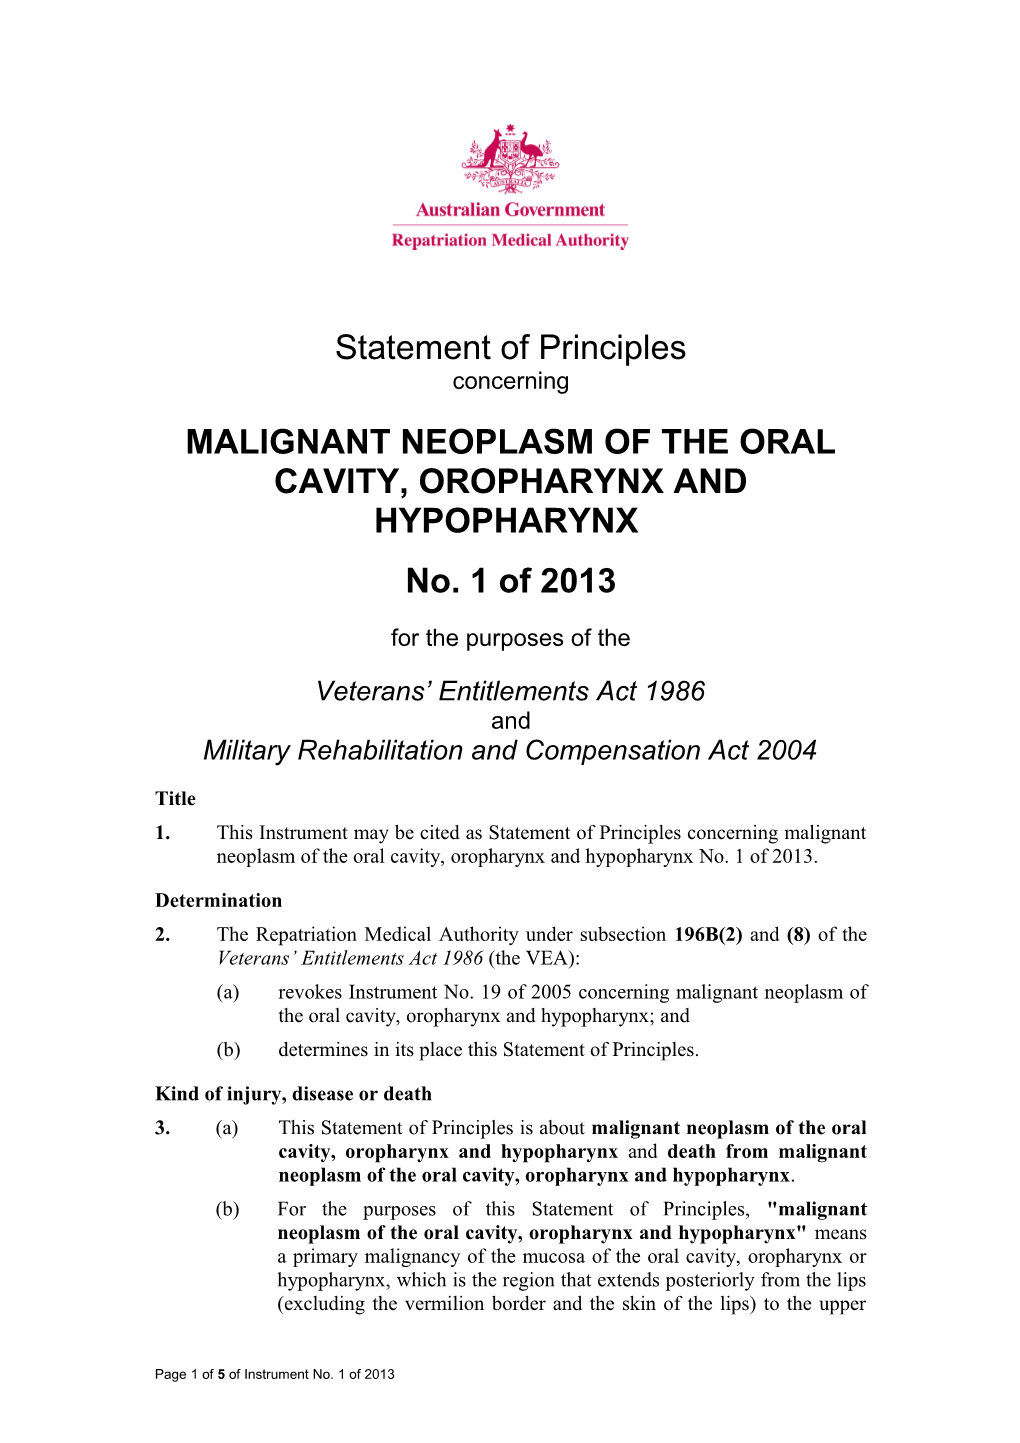 Malignant Neoplasm of the Oral Cavity, Oropharynx and Hypopharynx